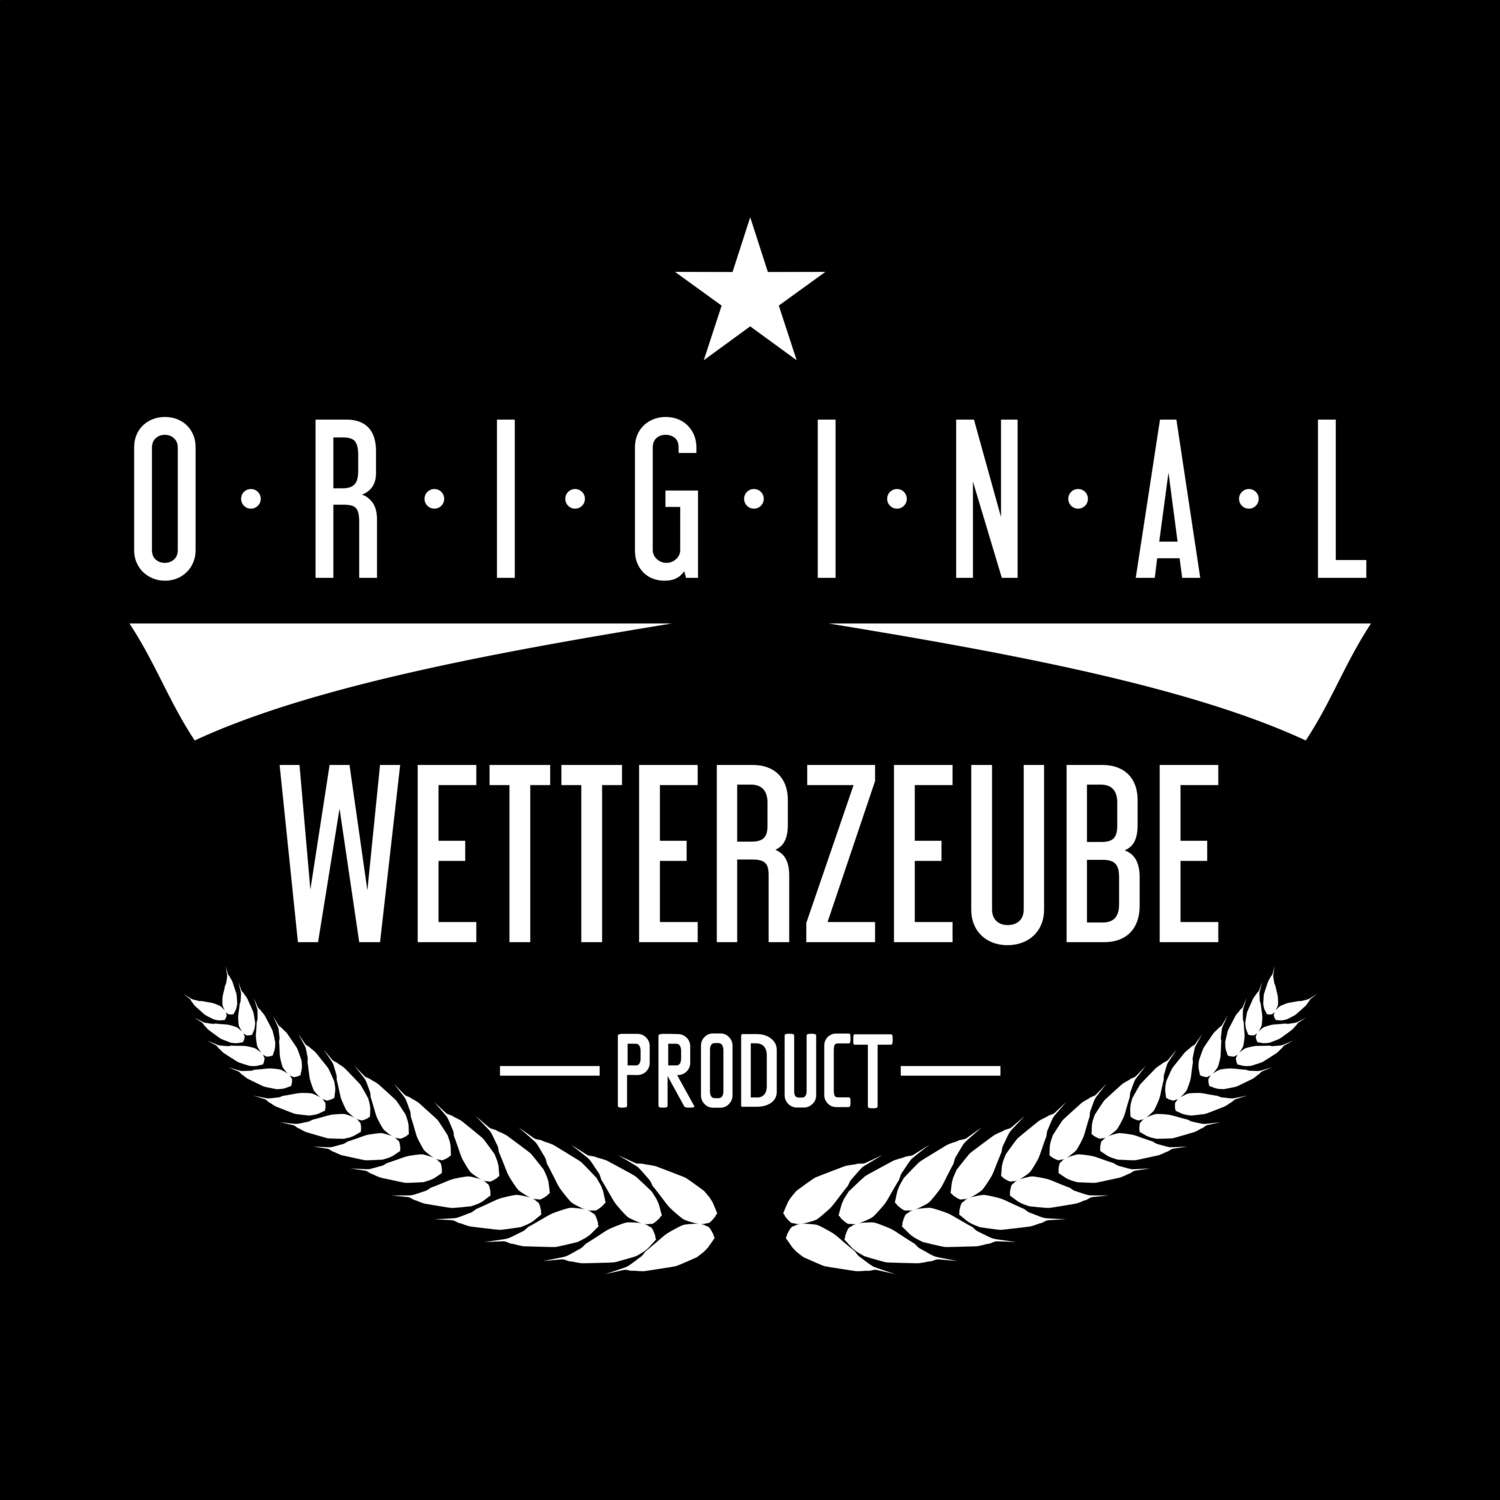 Wetterzeube T-Shirt »Original Product«